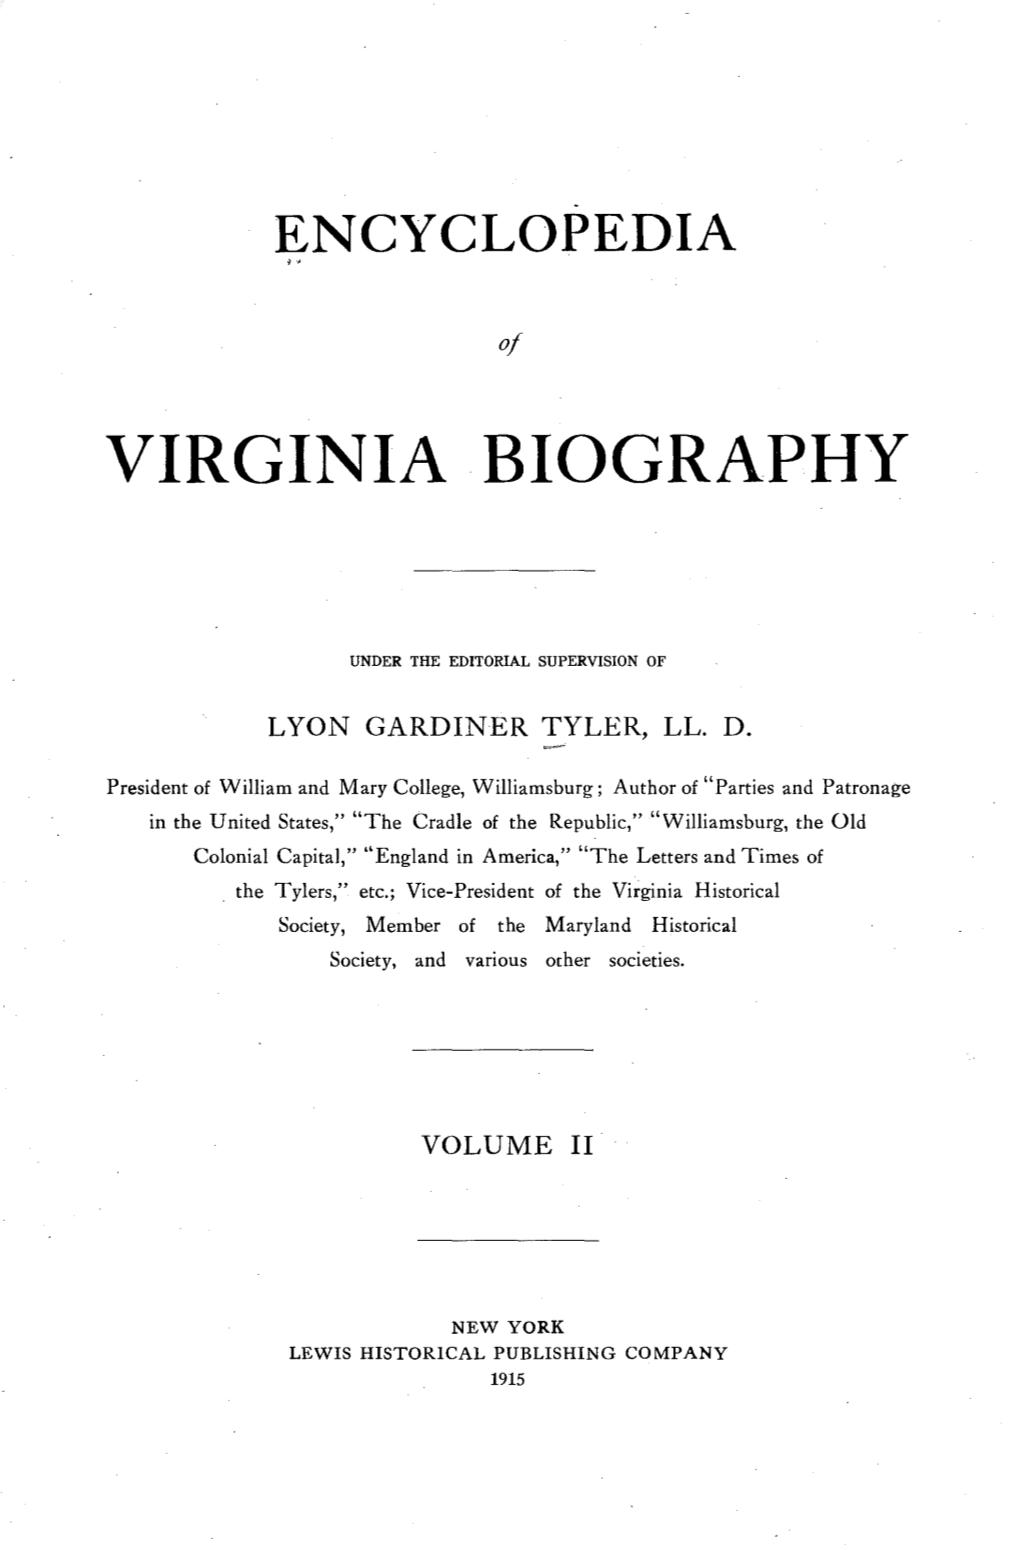 Virginia Biography